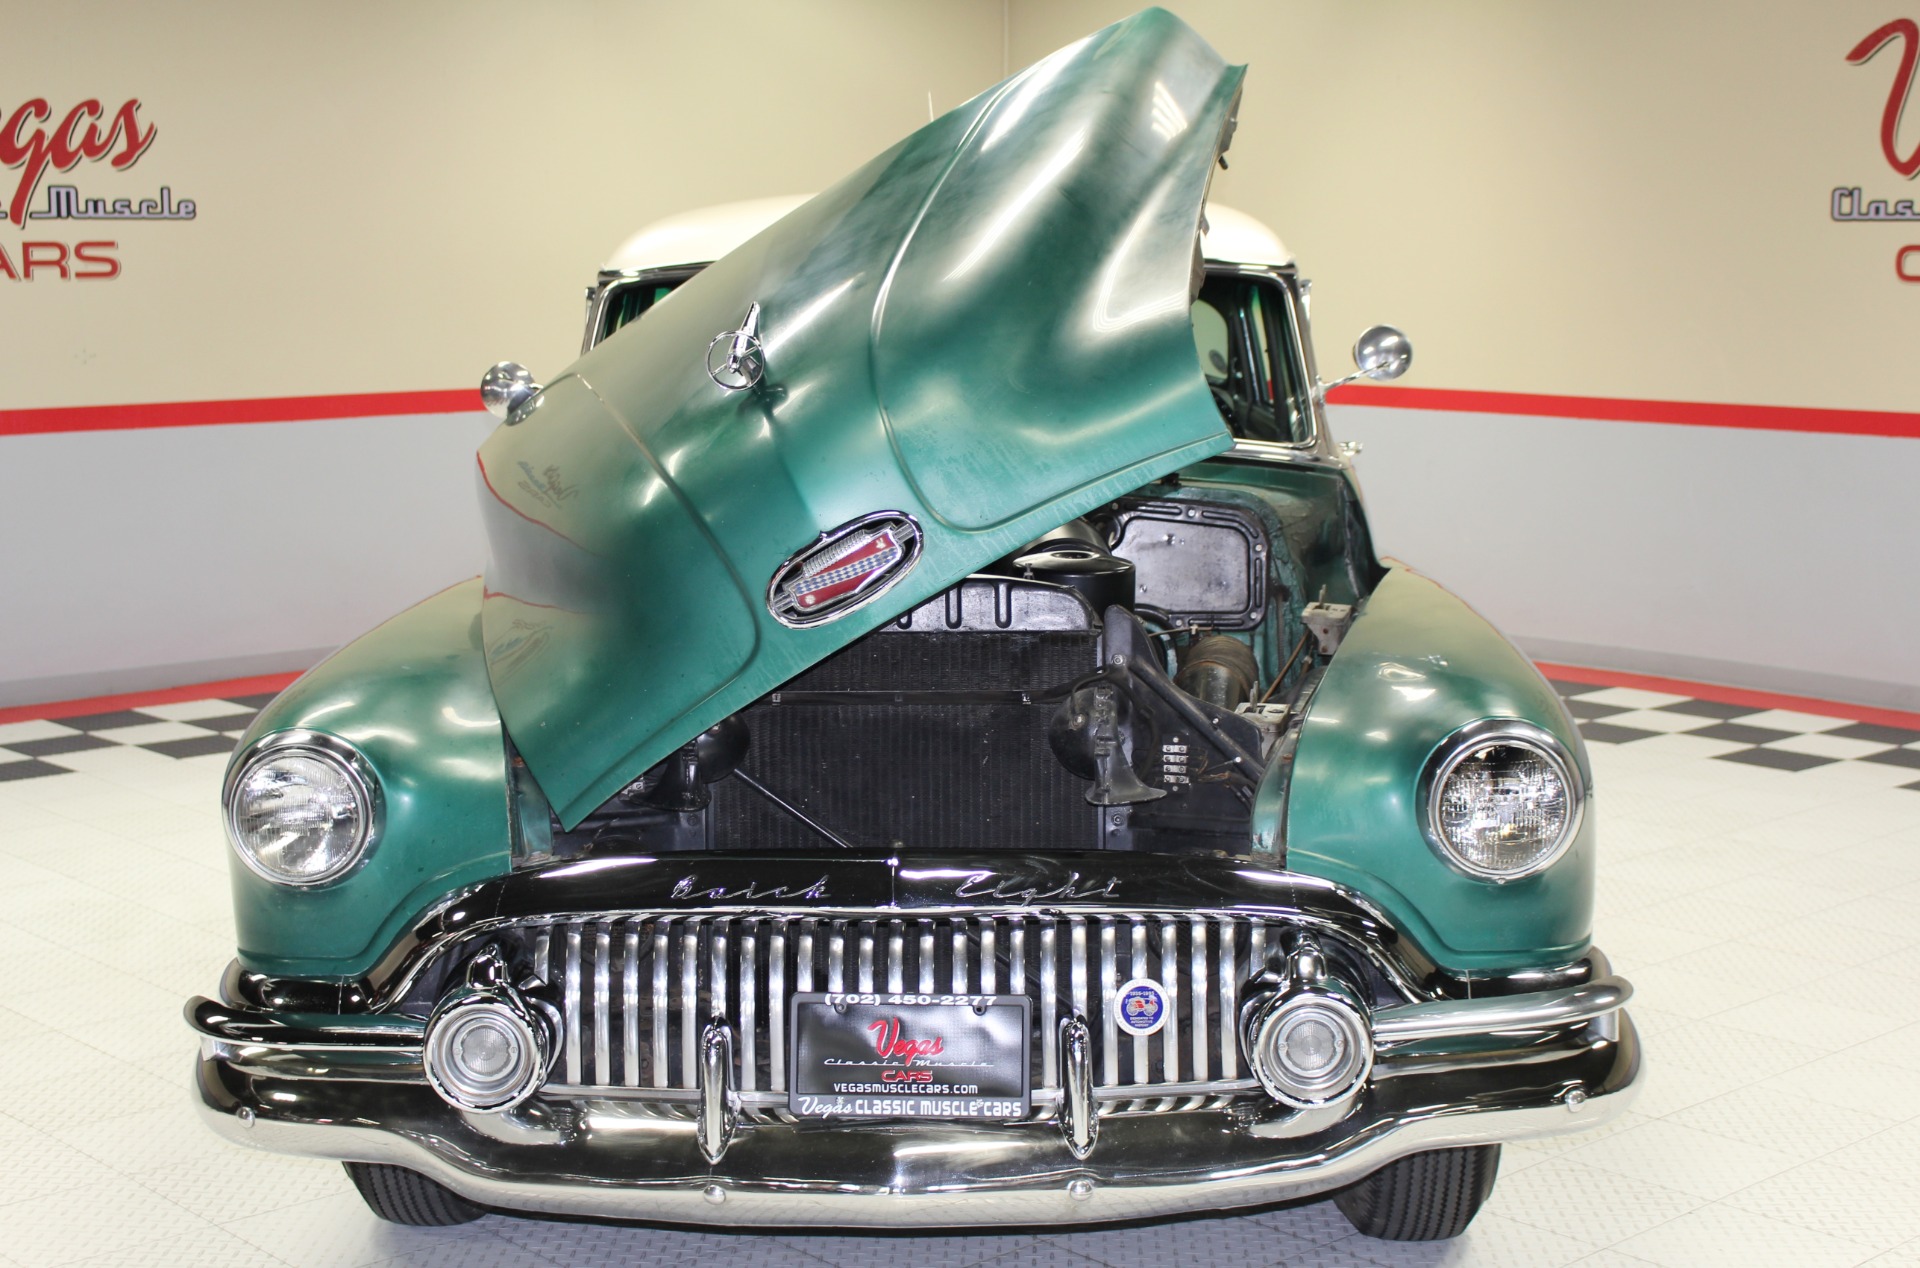 Classic 1951 Buick Roadmaster Riviera Zu Verkaufen. Preis 45 000